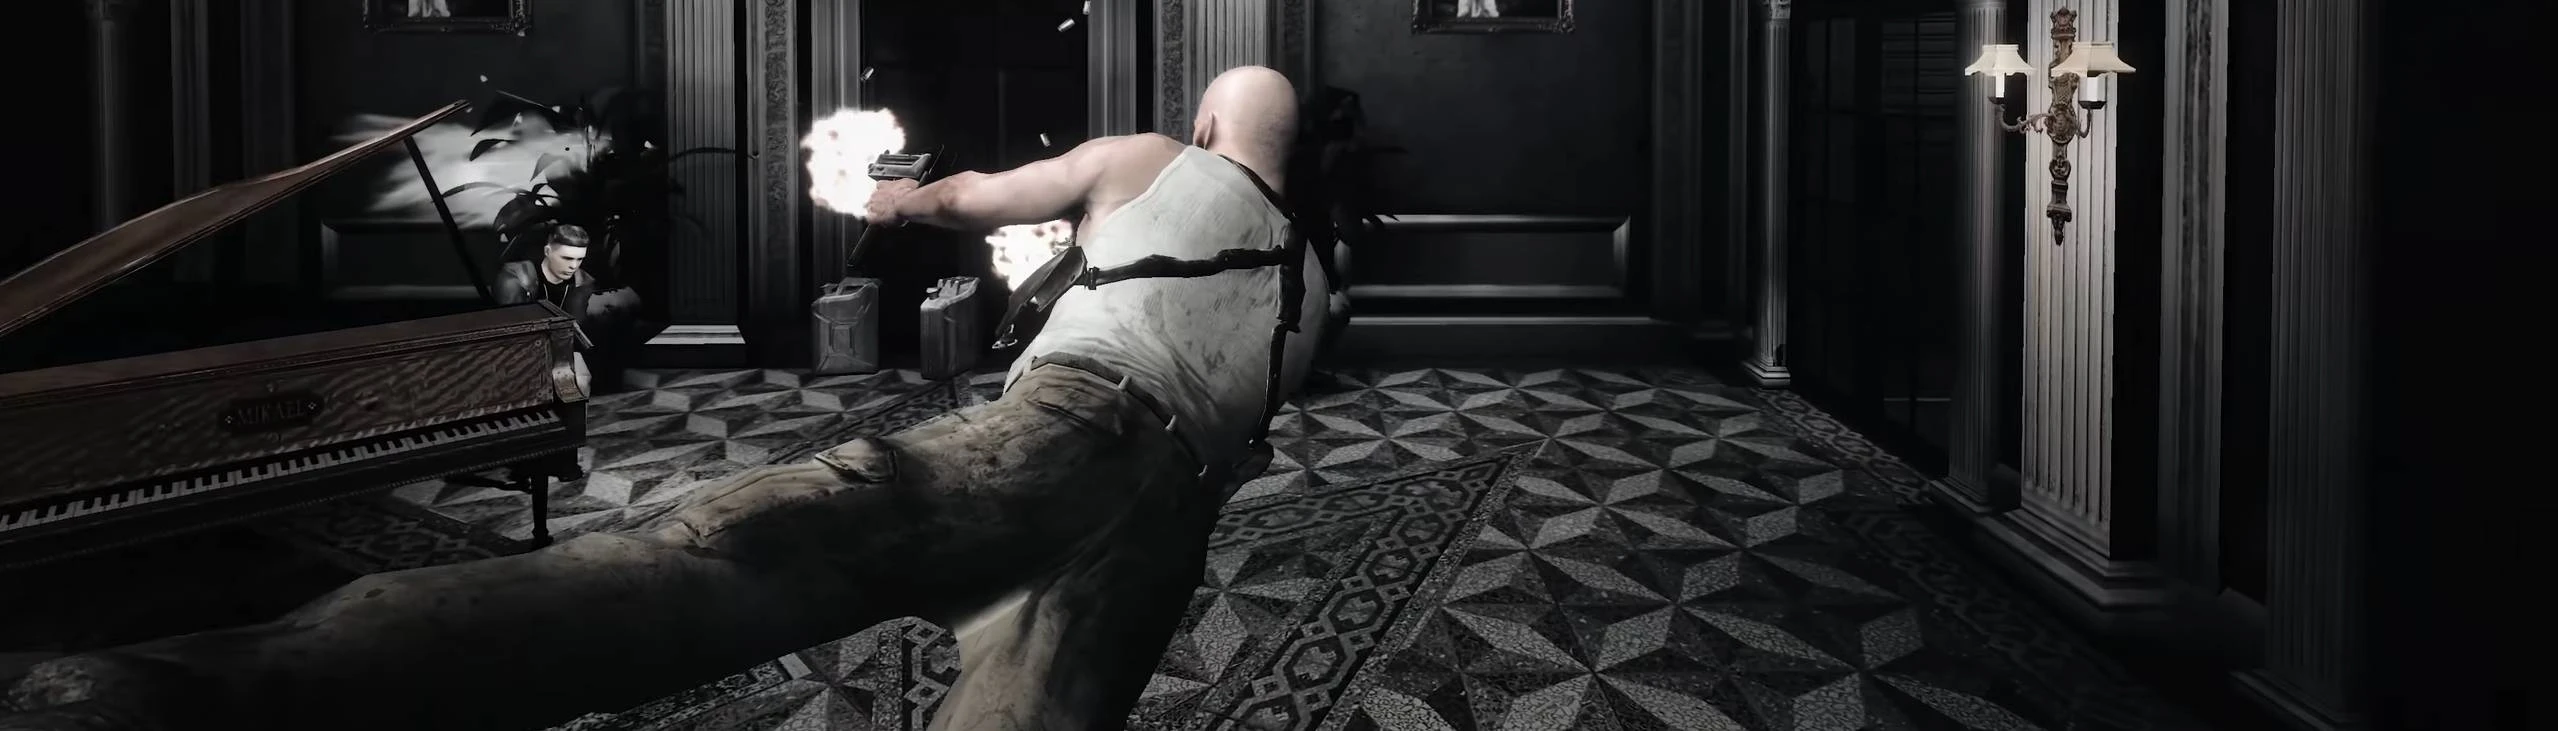 Max Payne Remastered (Reshade) - Full Game Walkthrough 